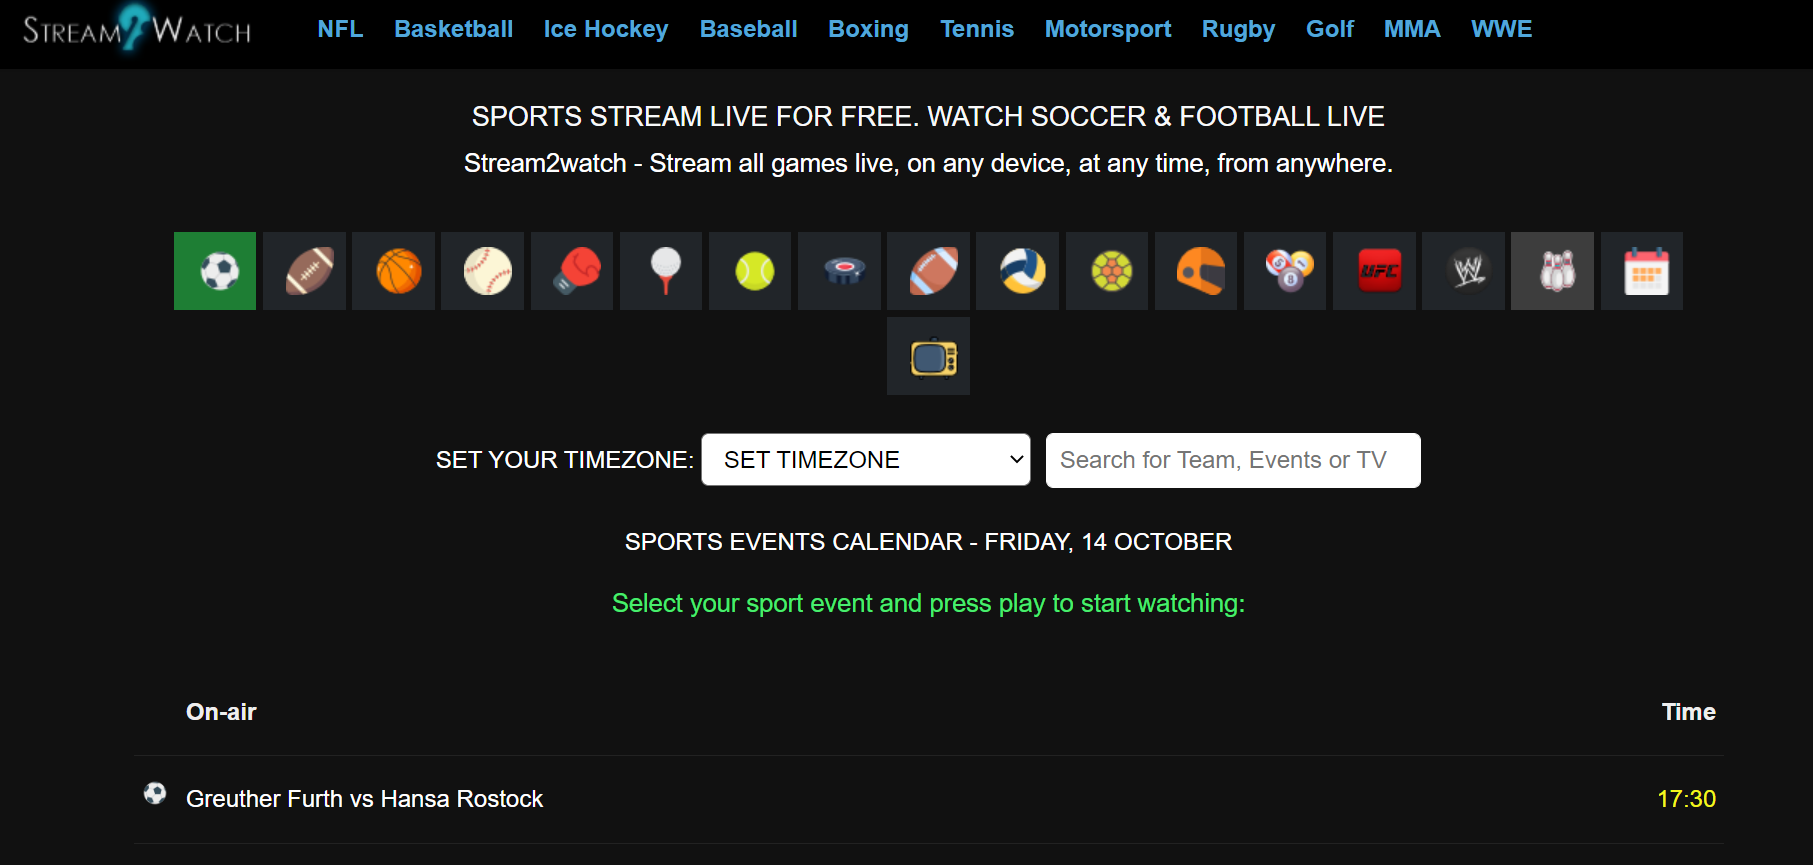 Stream2Watch - Sport inklusive gratis NFL-livestreams